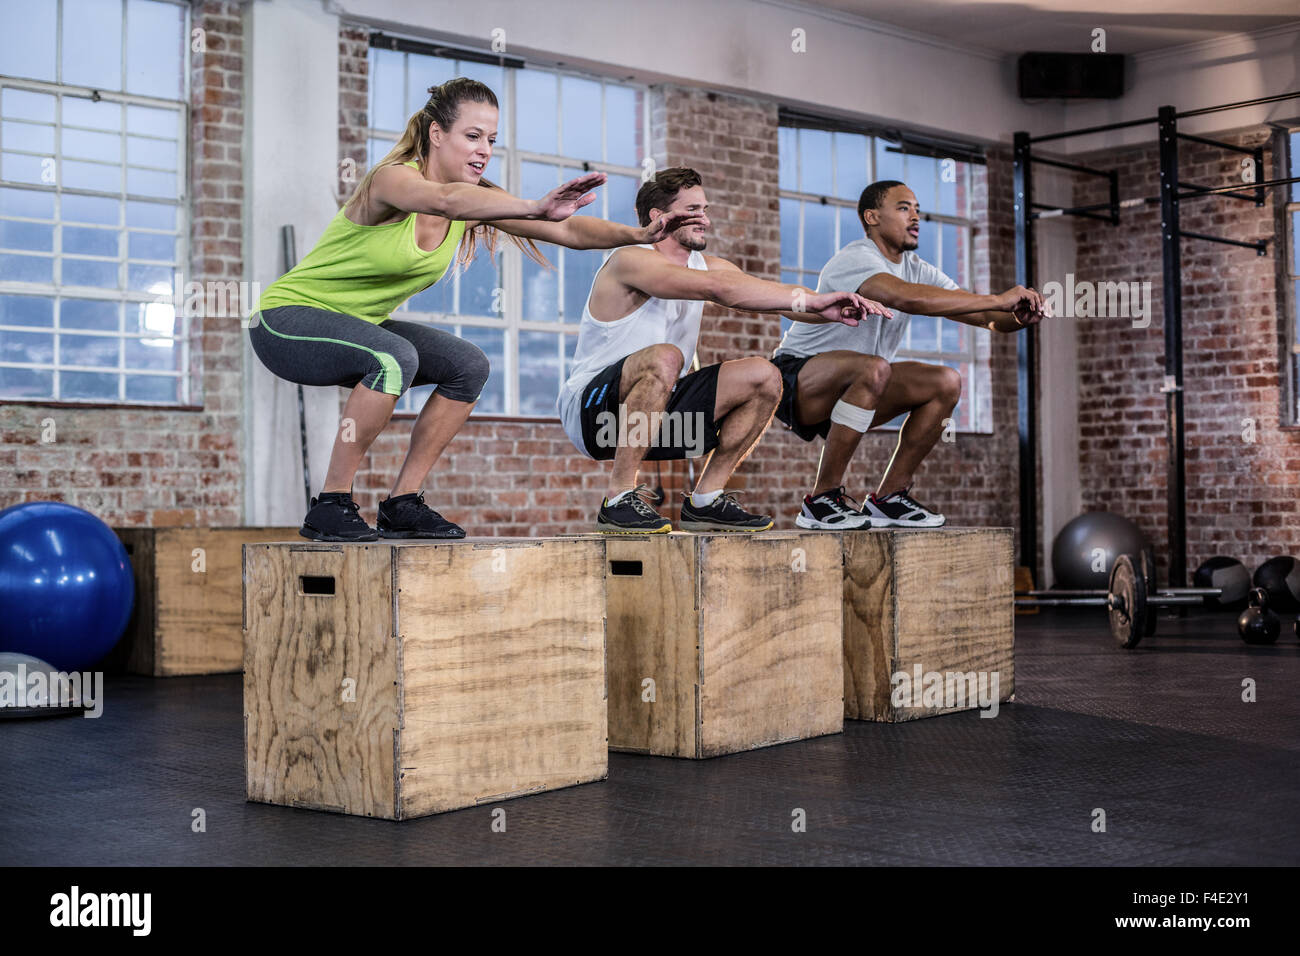 Three fit athletes squatting together Stock Photo